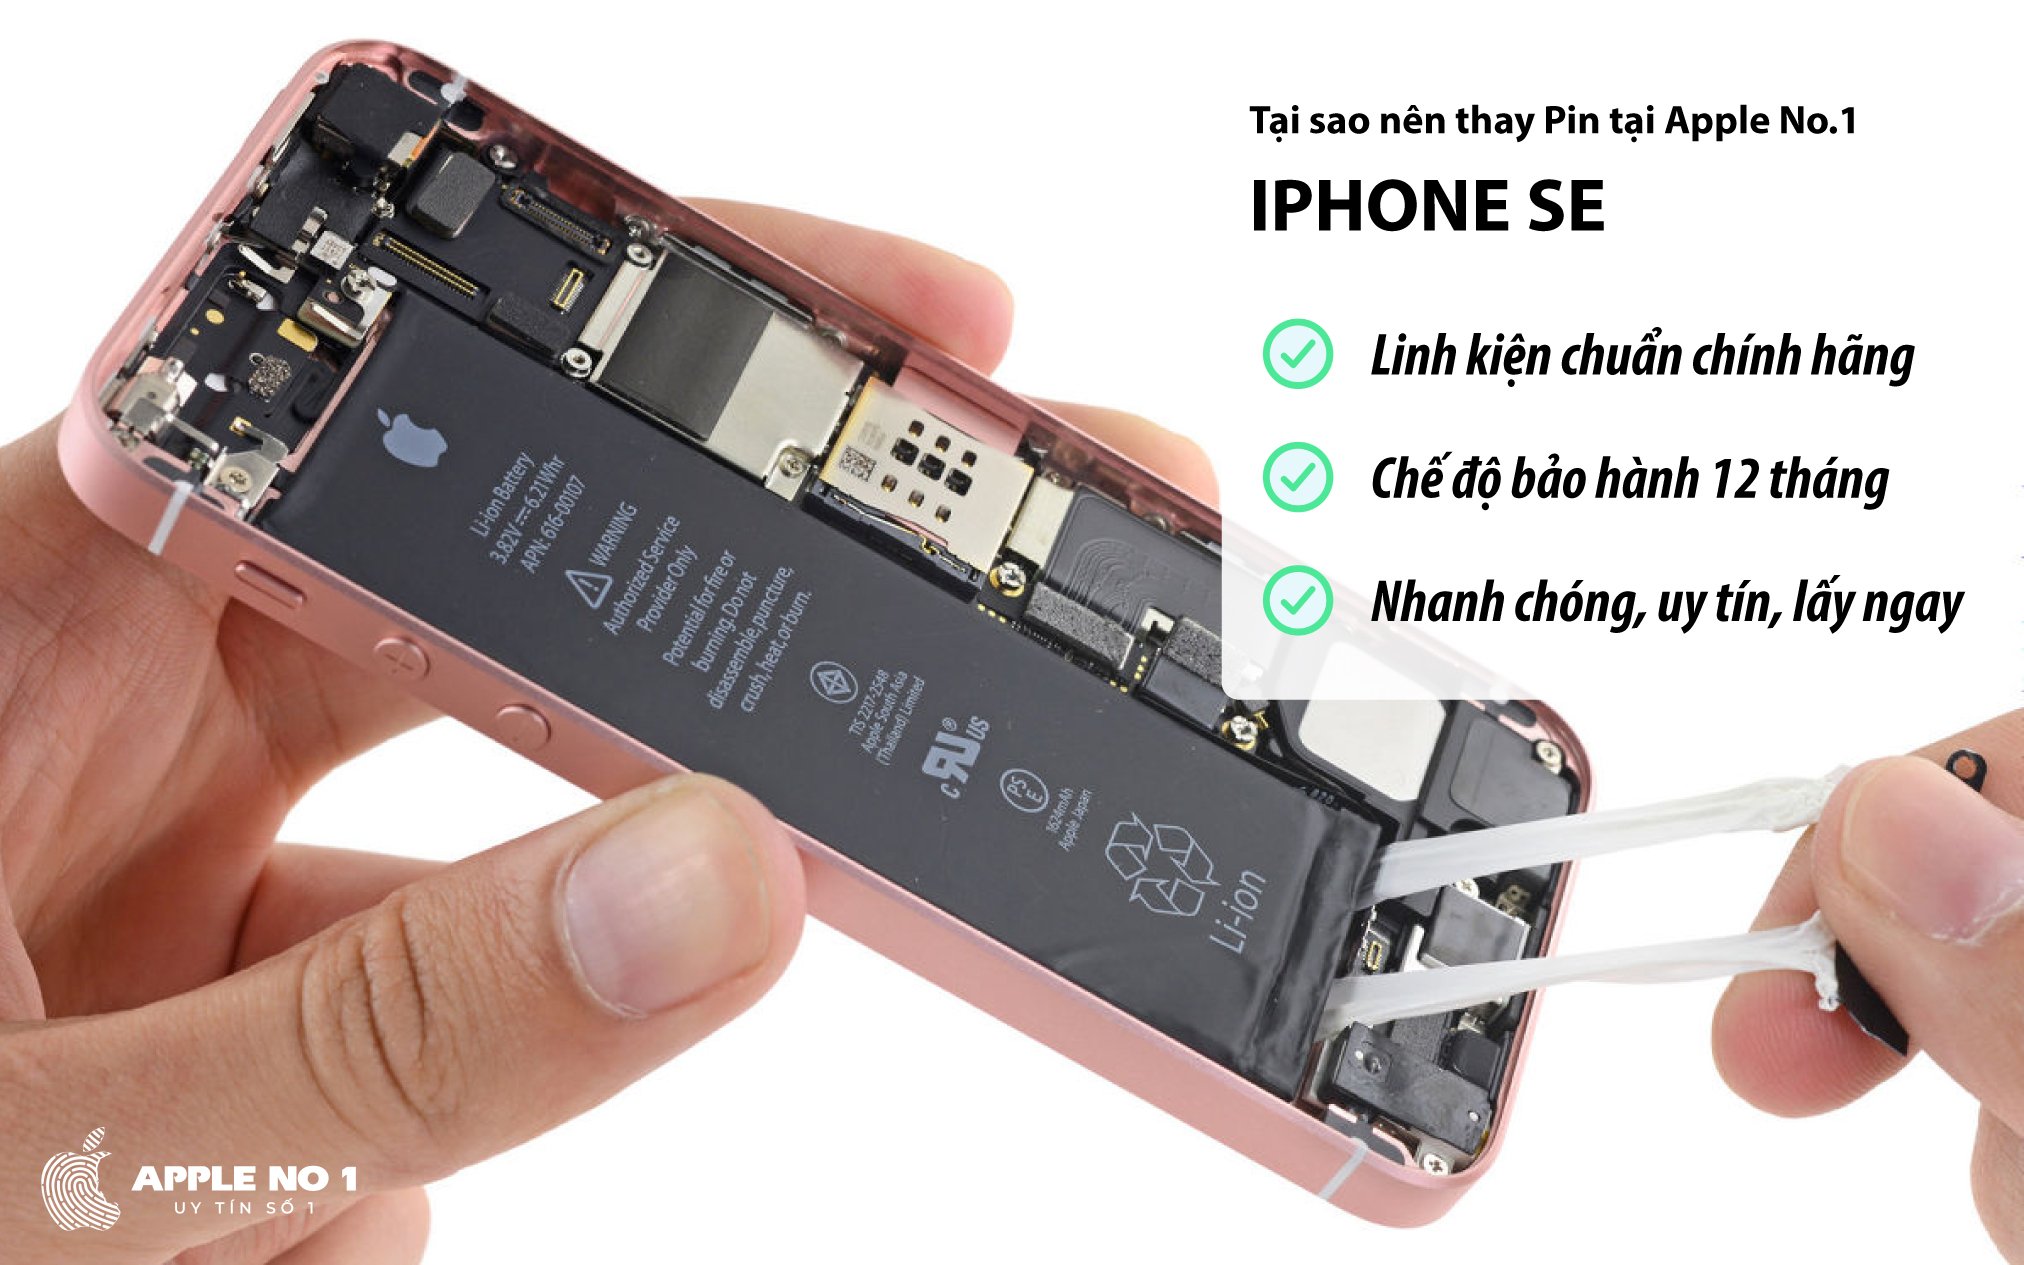 Dich vu thay pin iPhone SE dung luong chuan chinh hang tai Apple No.1